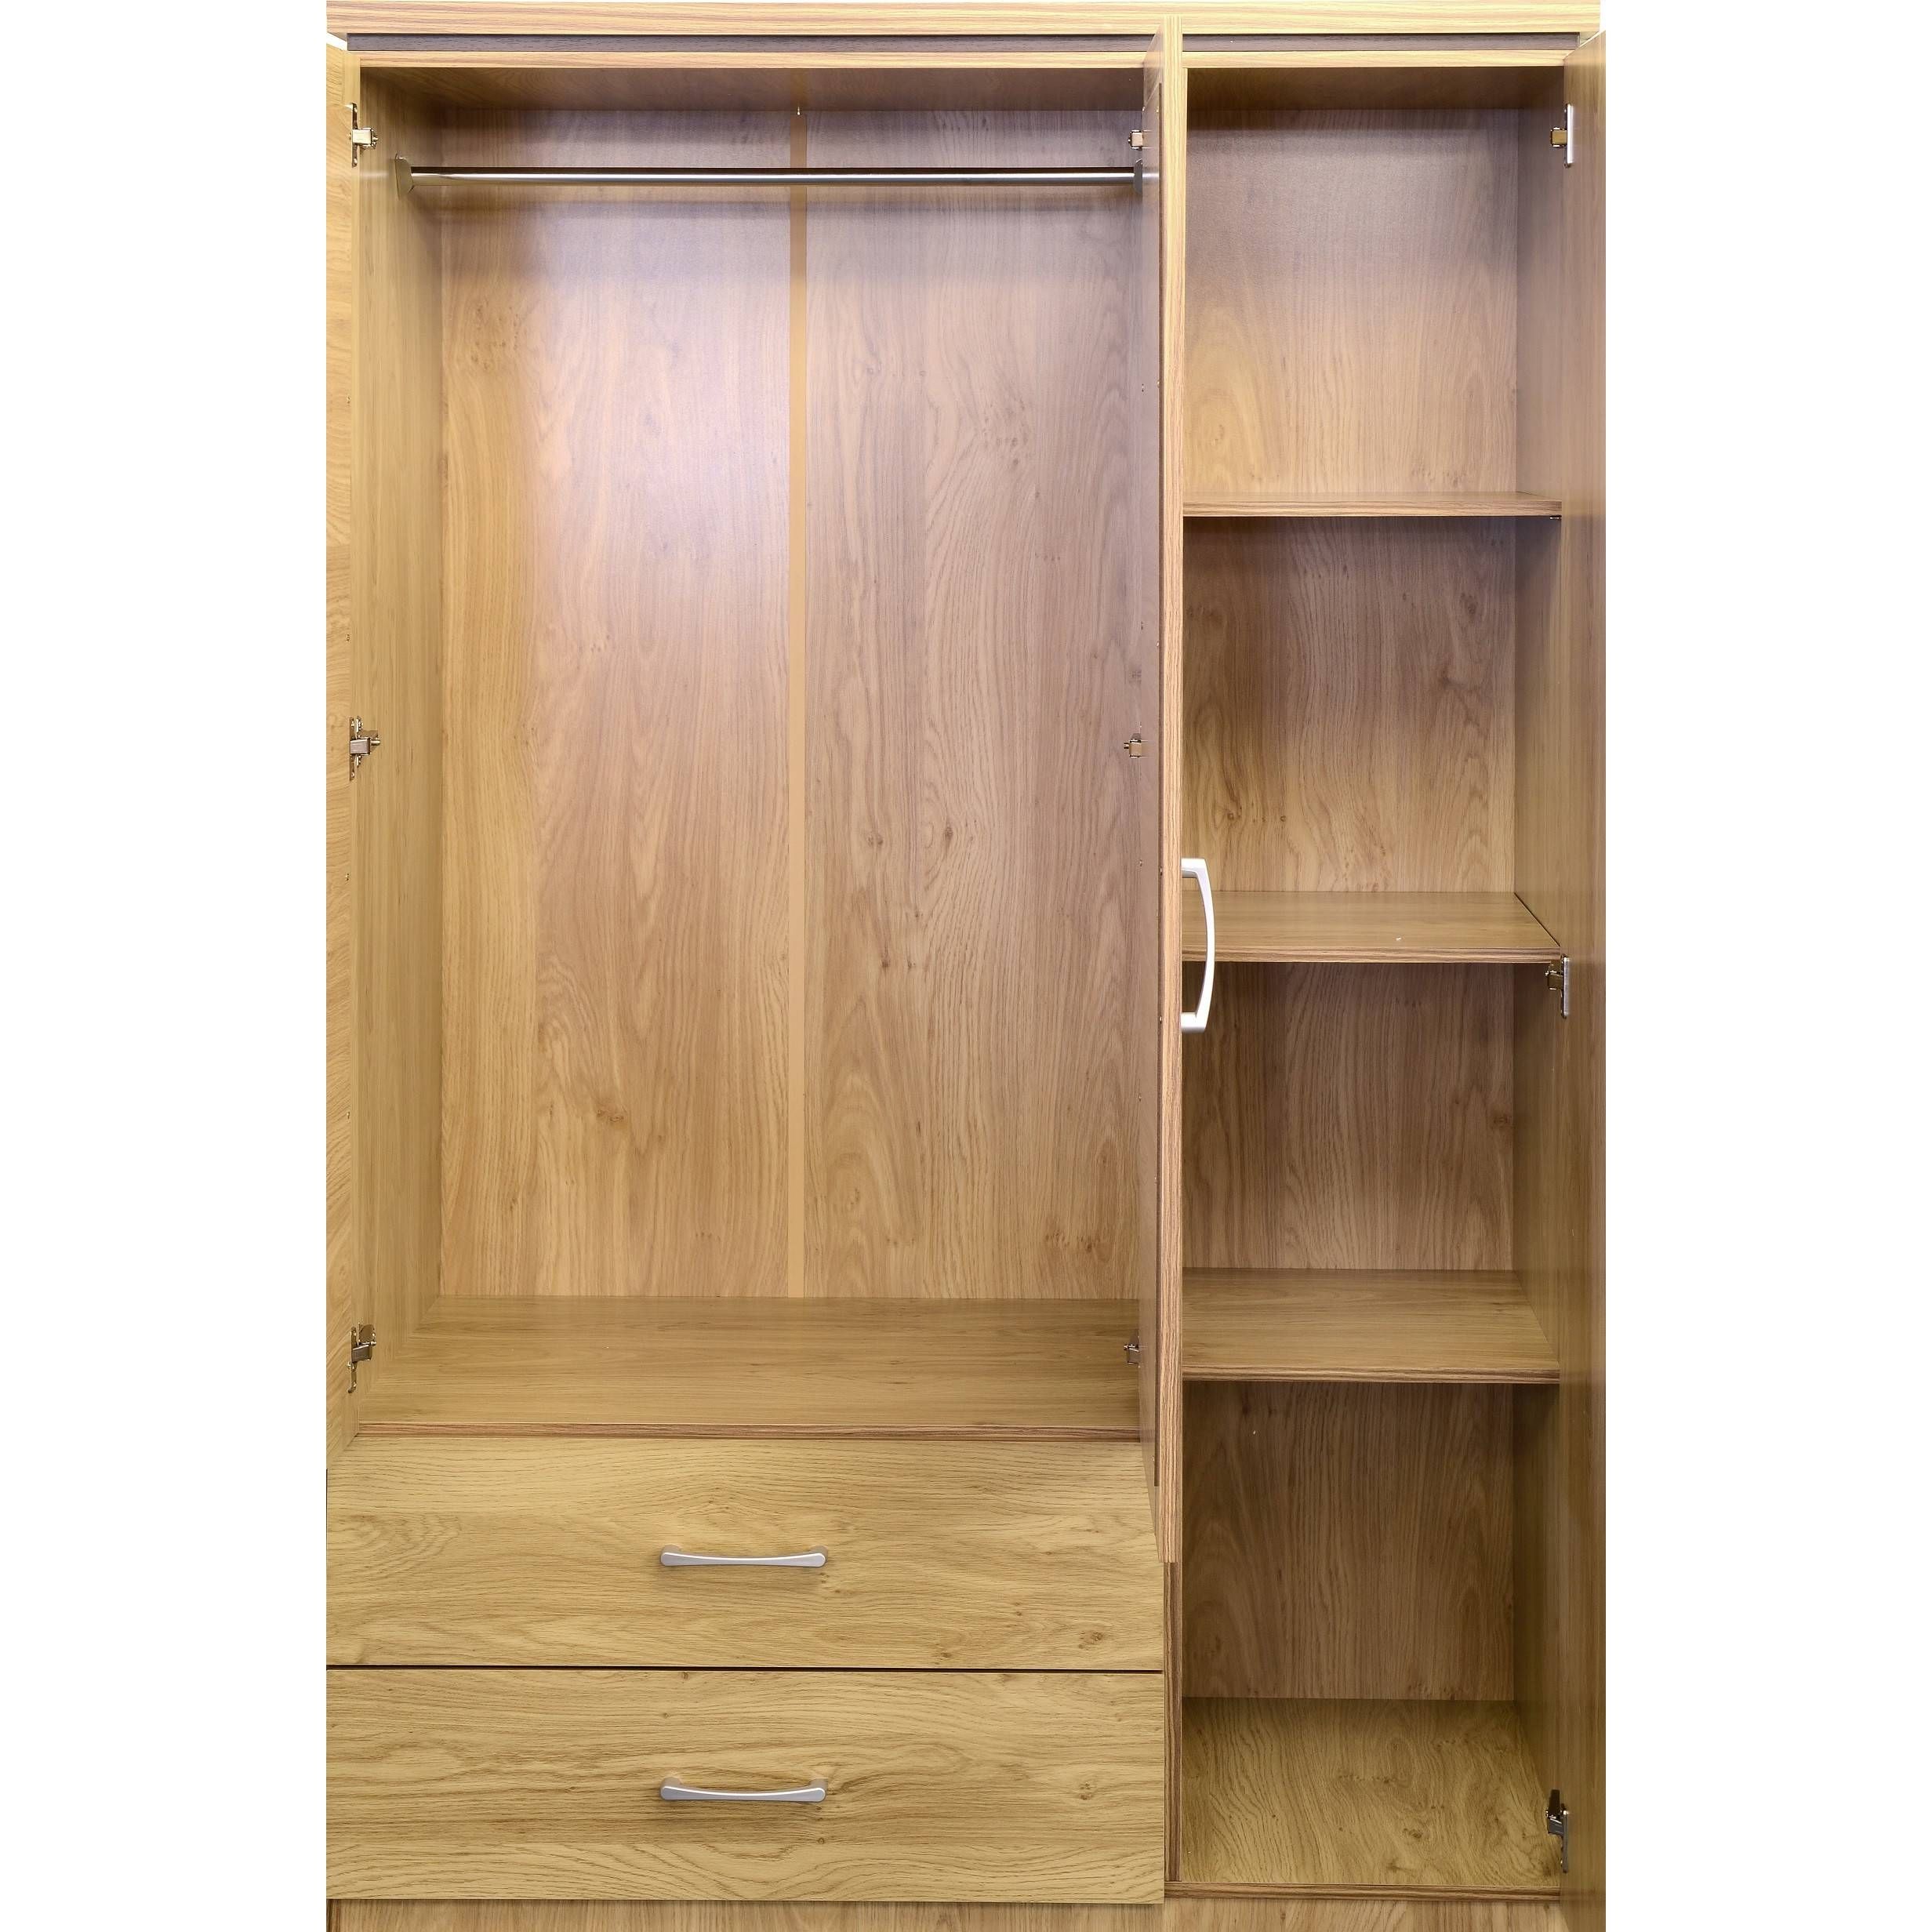 Furniture: Hokku Designs Alpha 2 Door Wardrobe Modern New 2017 For 2 Door Wardrobe With Drawers And Shelves (View 24 of 30)